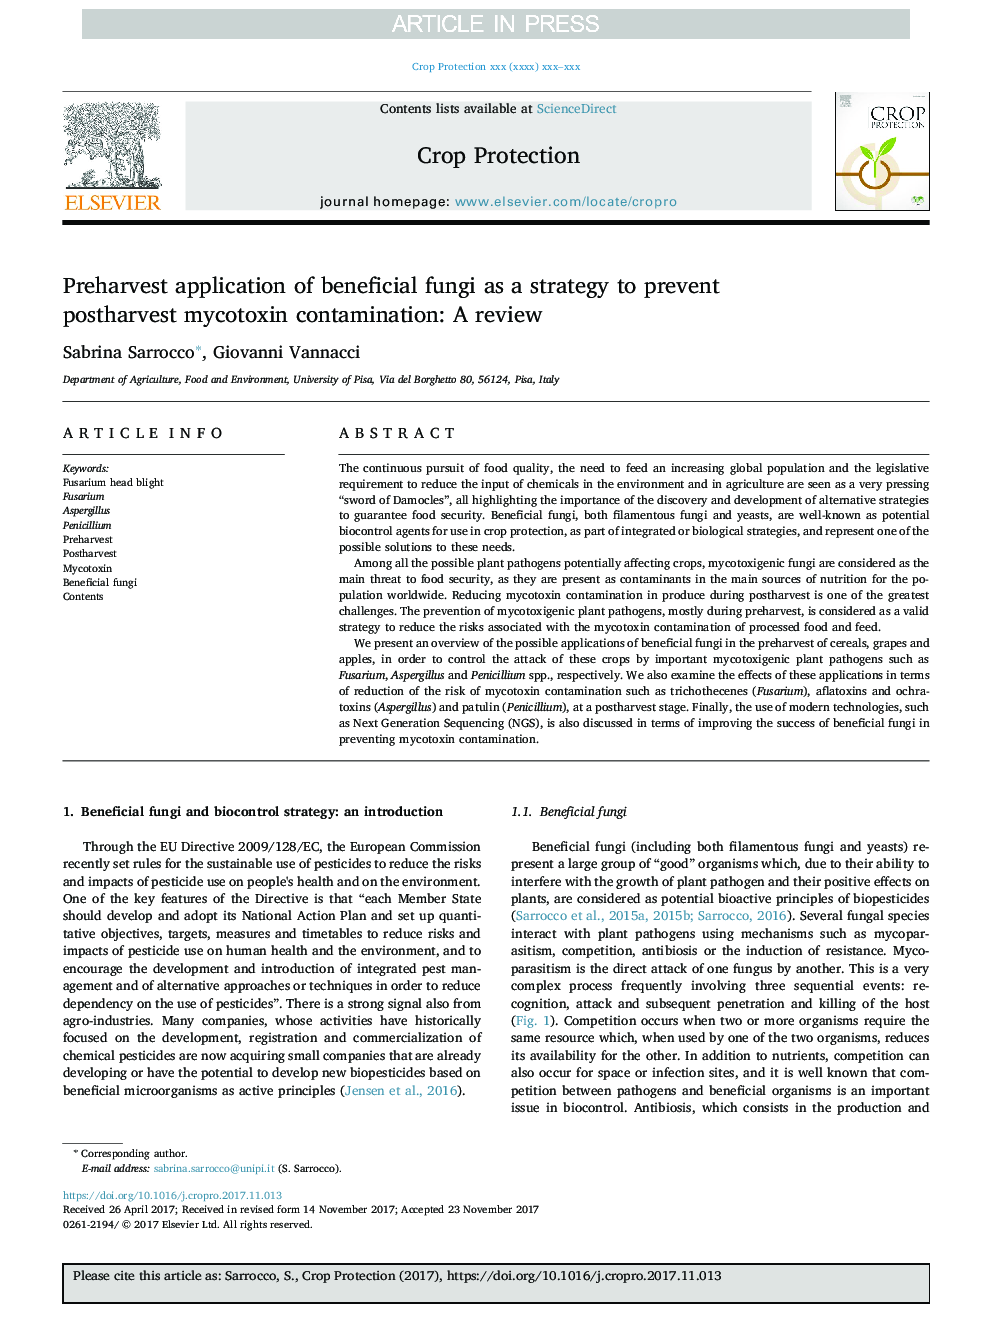 Preharvest application of beneficial fungi as a strategy to prevent postharvest mycotoxin contamination: A review